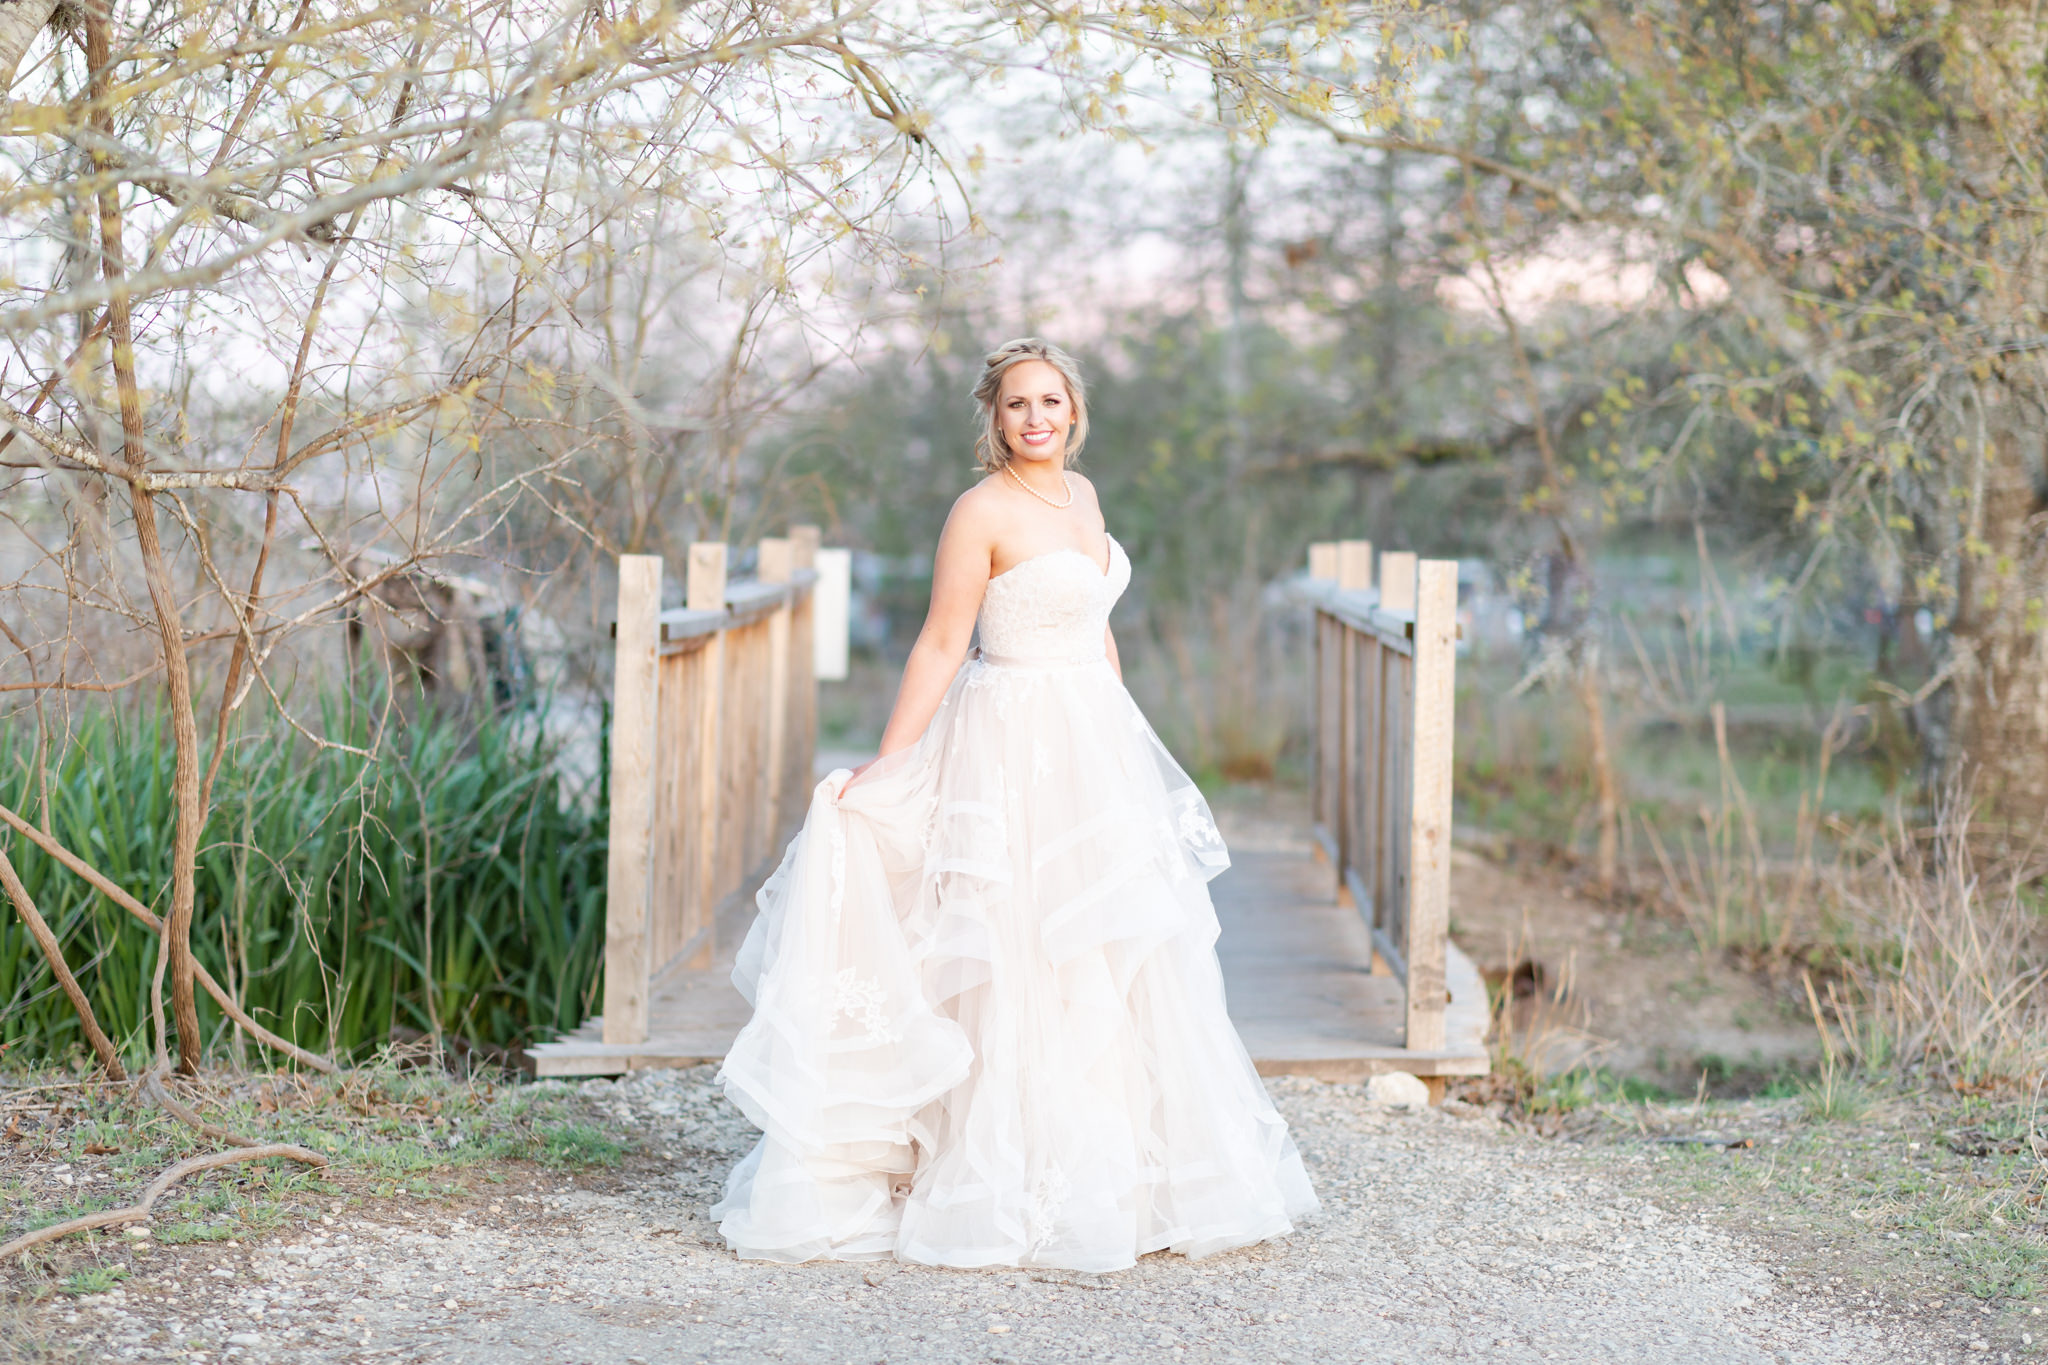 A Rustic Bridal Session at Cibolo Nature Center in Boerne, TX by Dawn Elizabeth Studios, Boerne Wedding Photographer